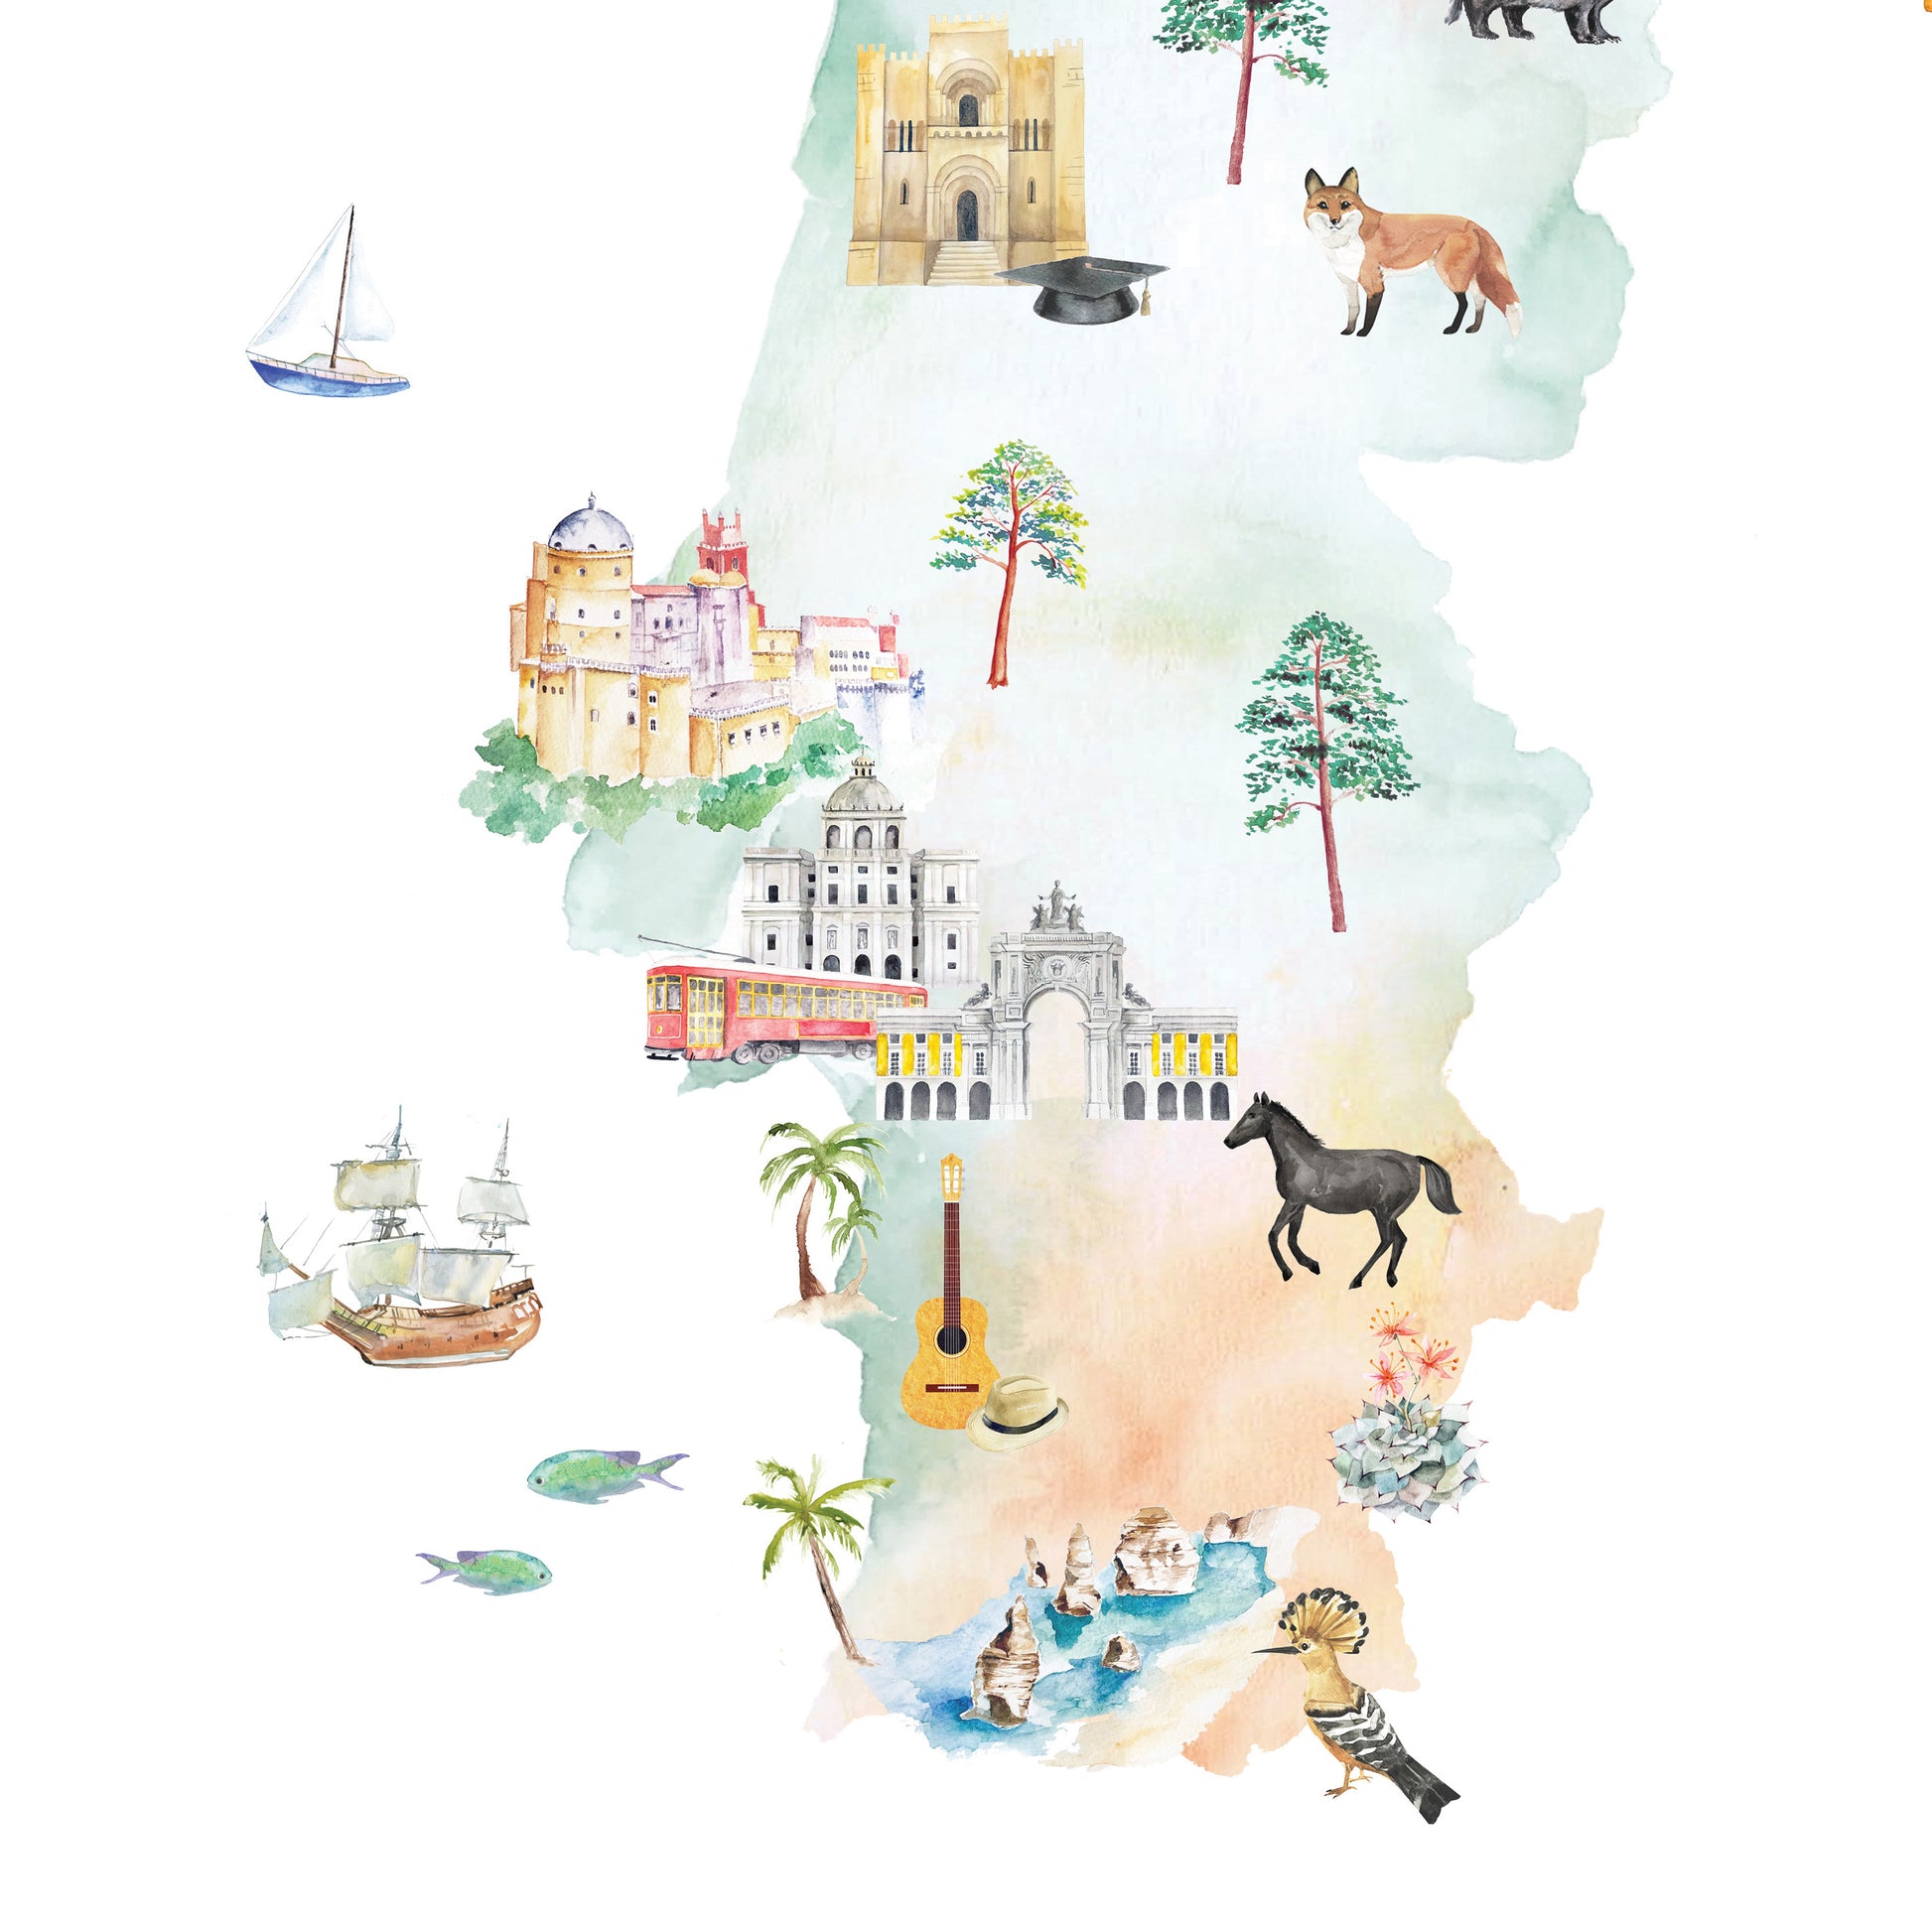 Mapa de Portugal - Lusa Mater